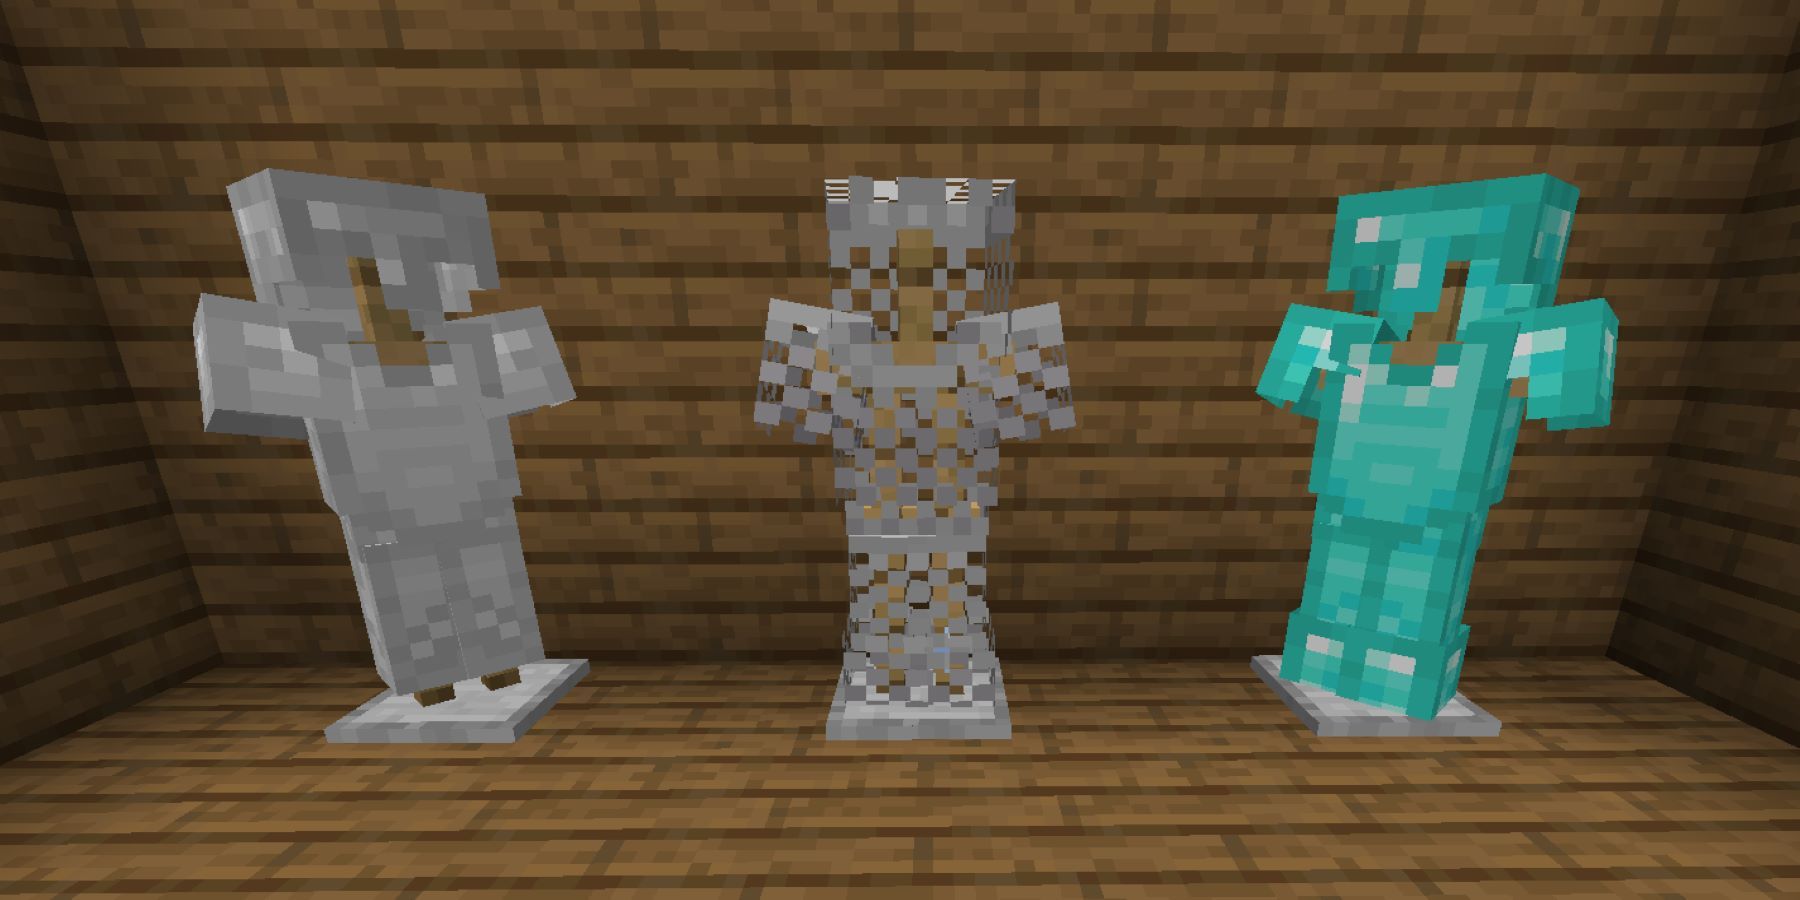 Minecraft chainmail armor, iron armor, and diamond armor on armor stands